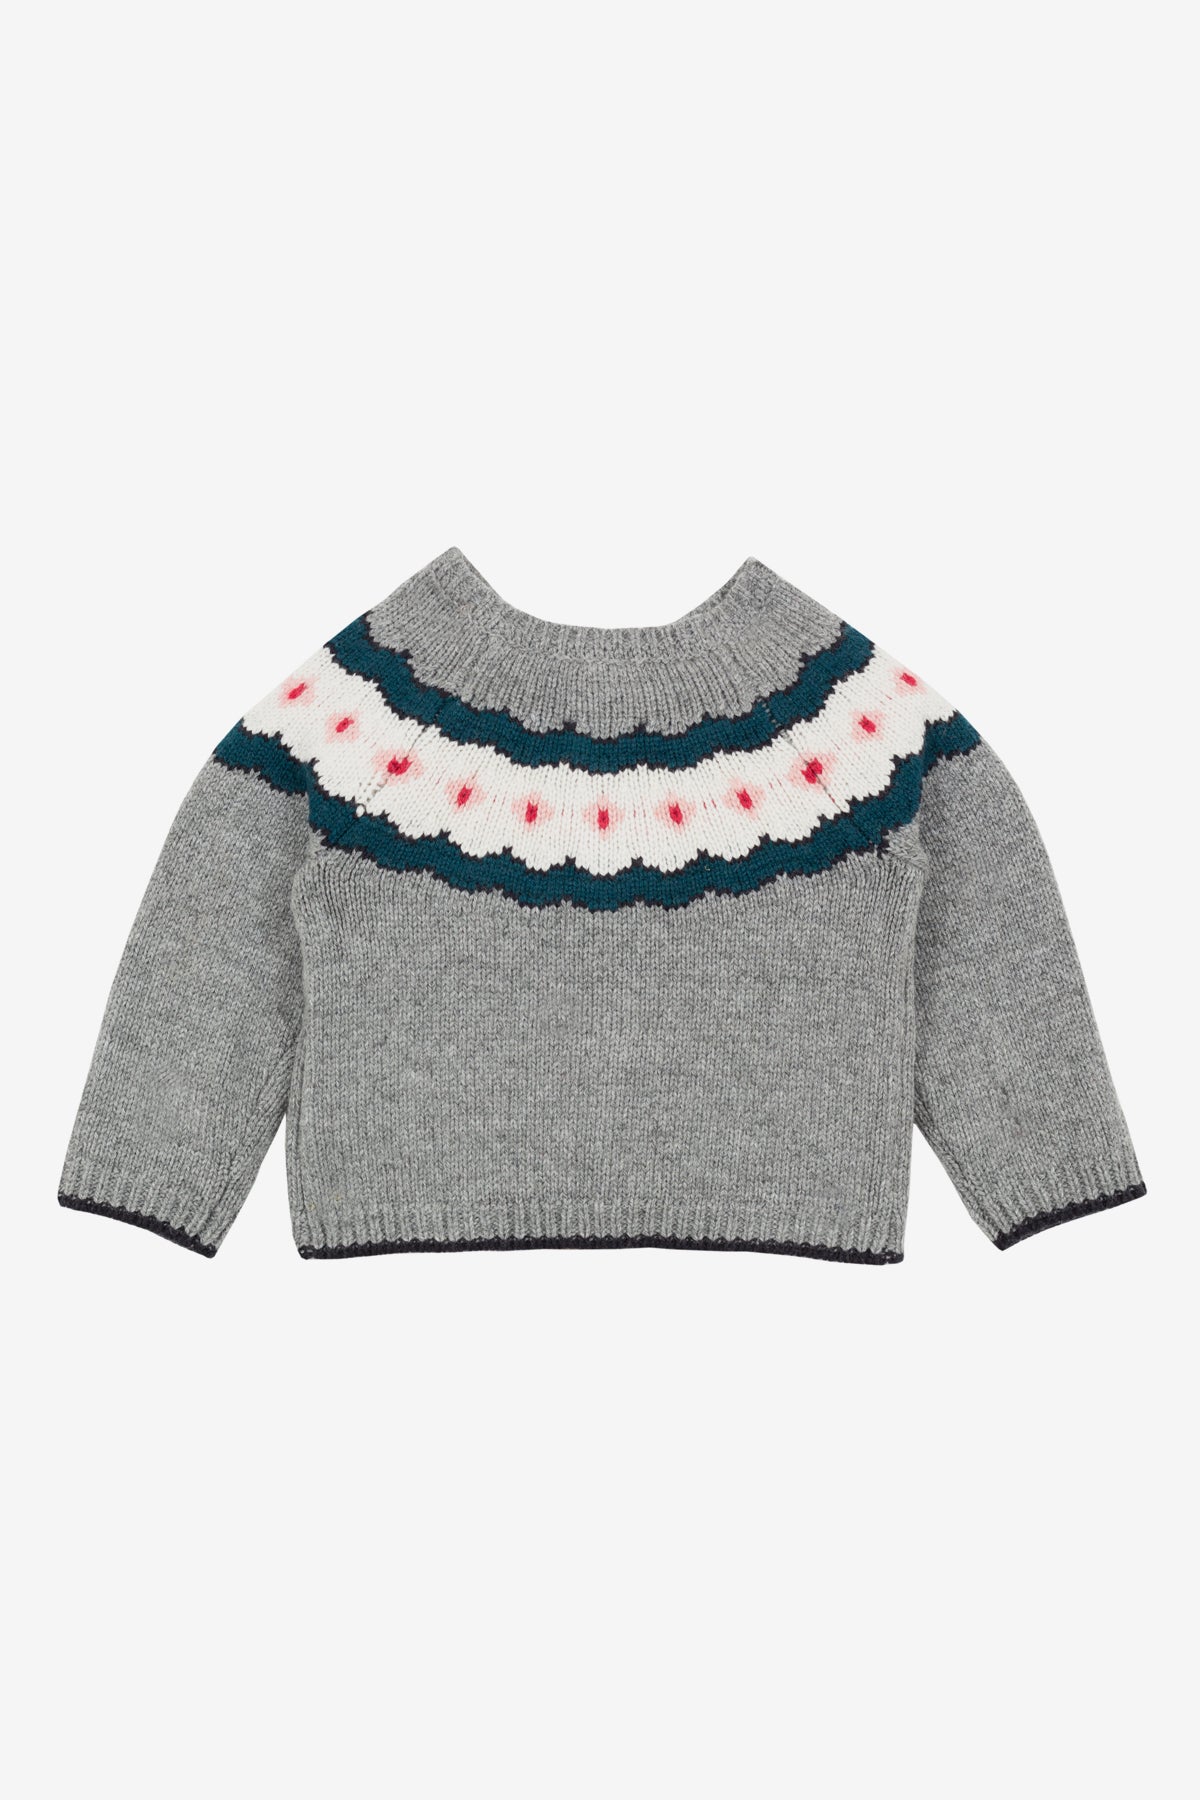 Jean Bourget Baby Knit Sweater – Mini Ruby